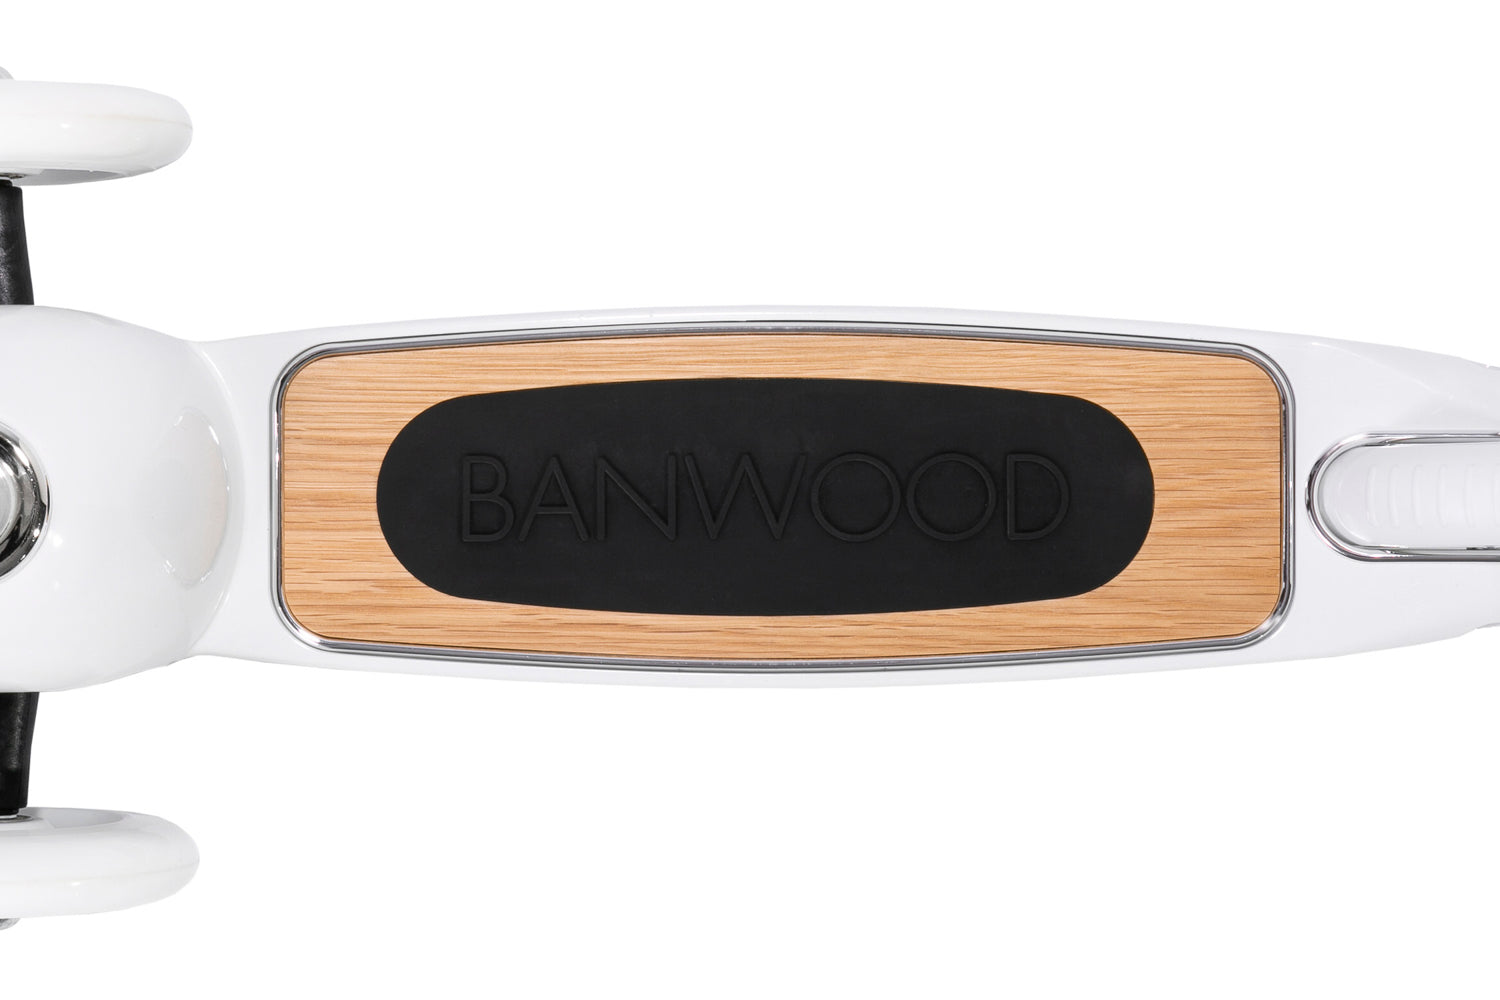 Banwood Scooter White